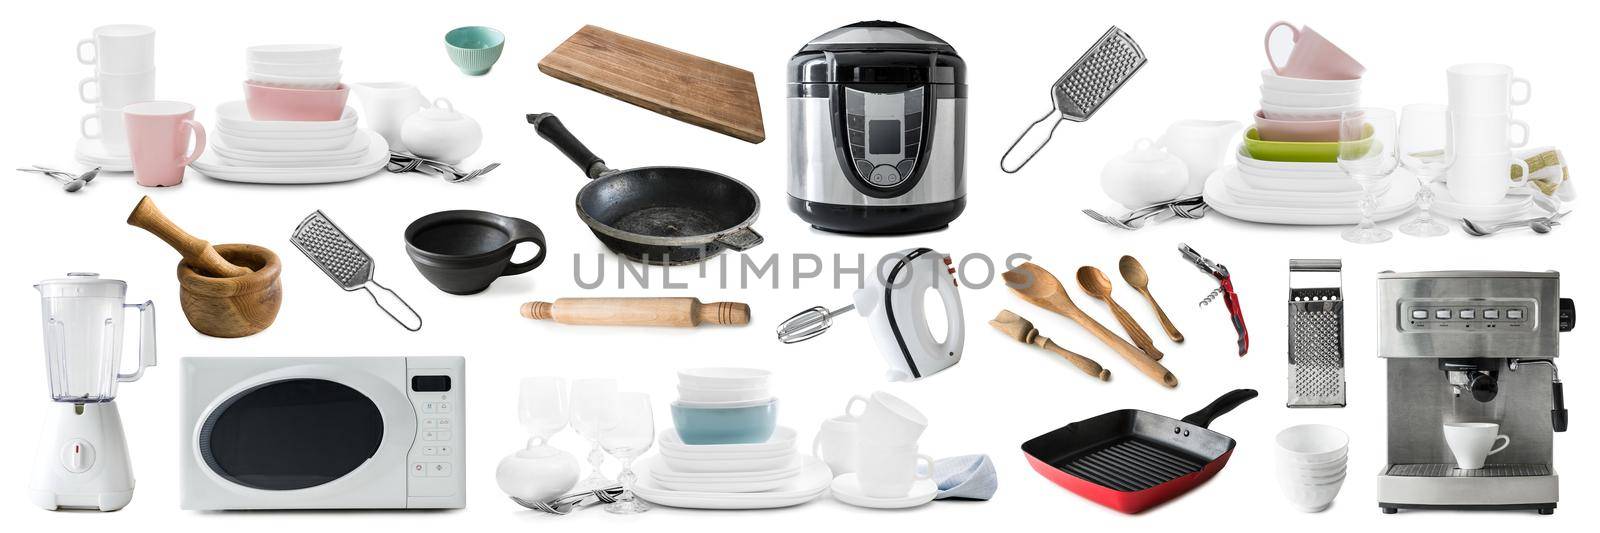 Kitchen household appliances set by tan4ikk1